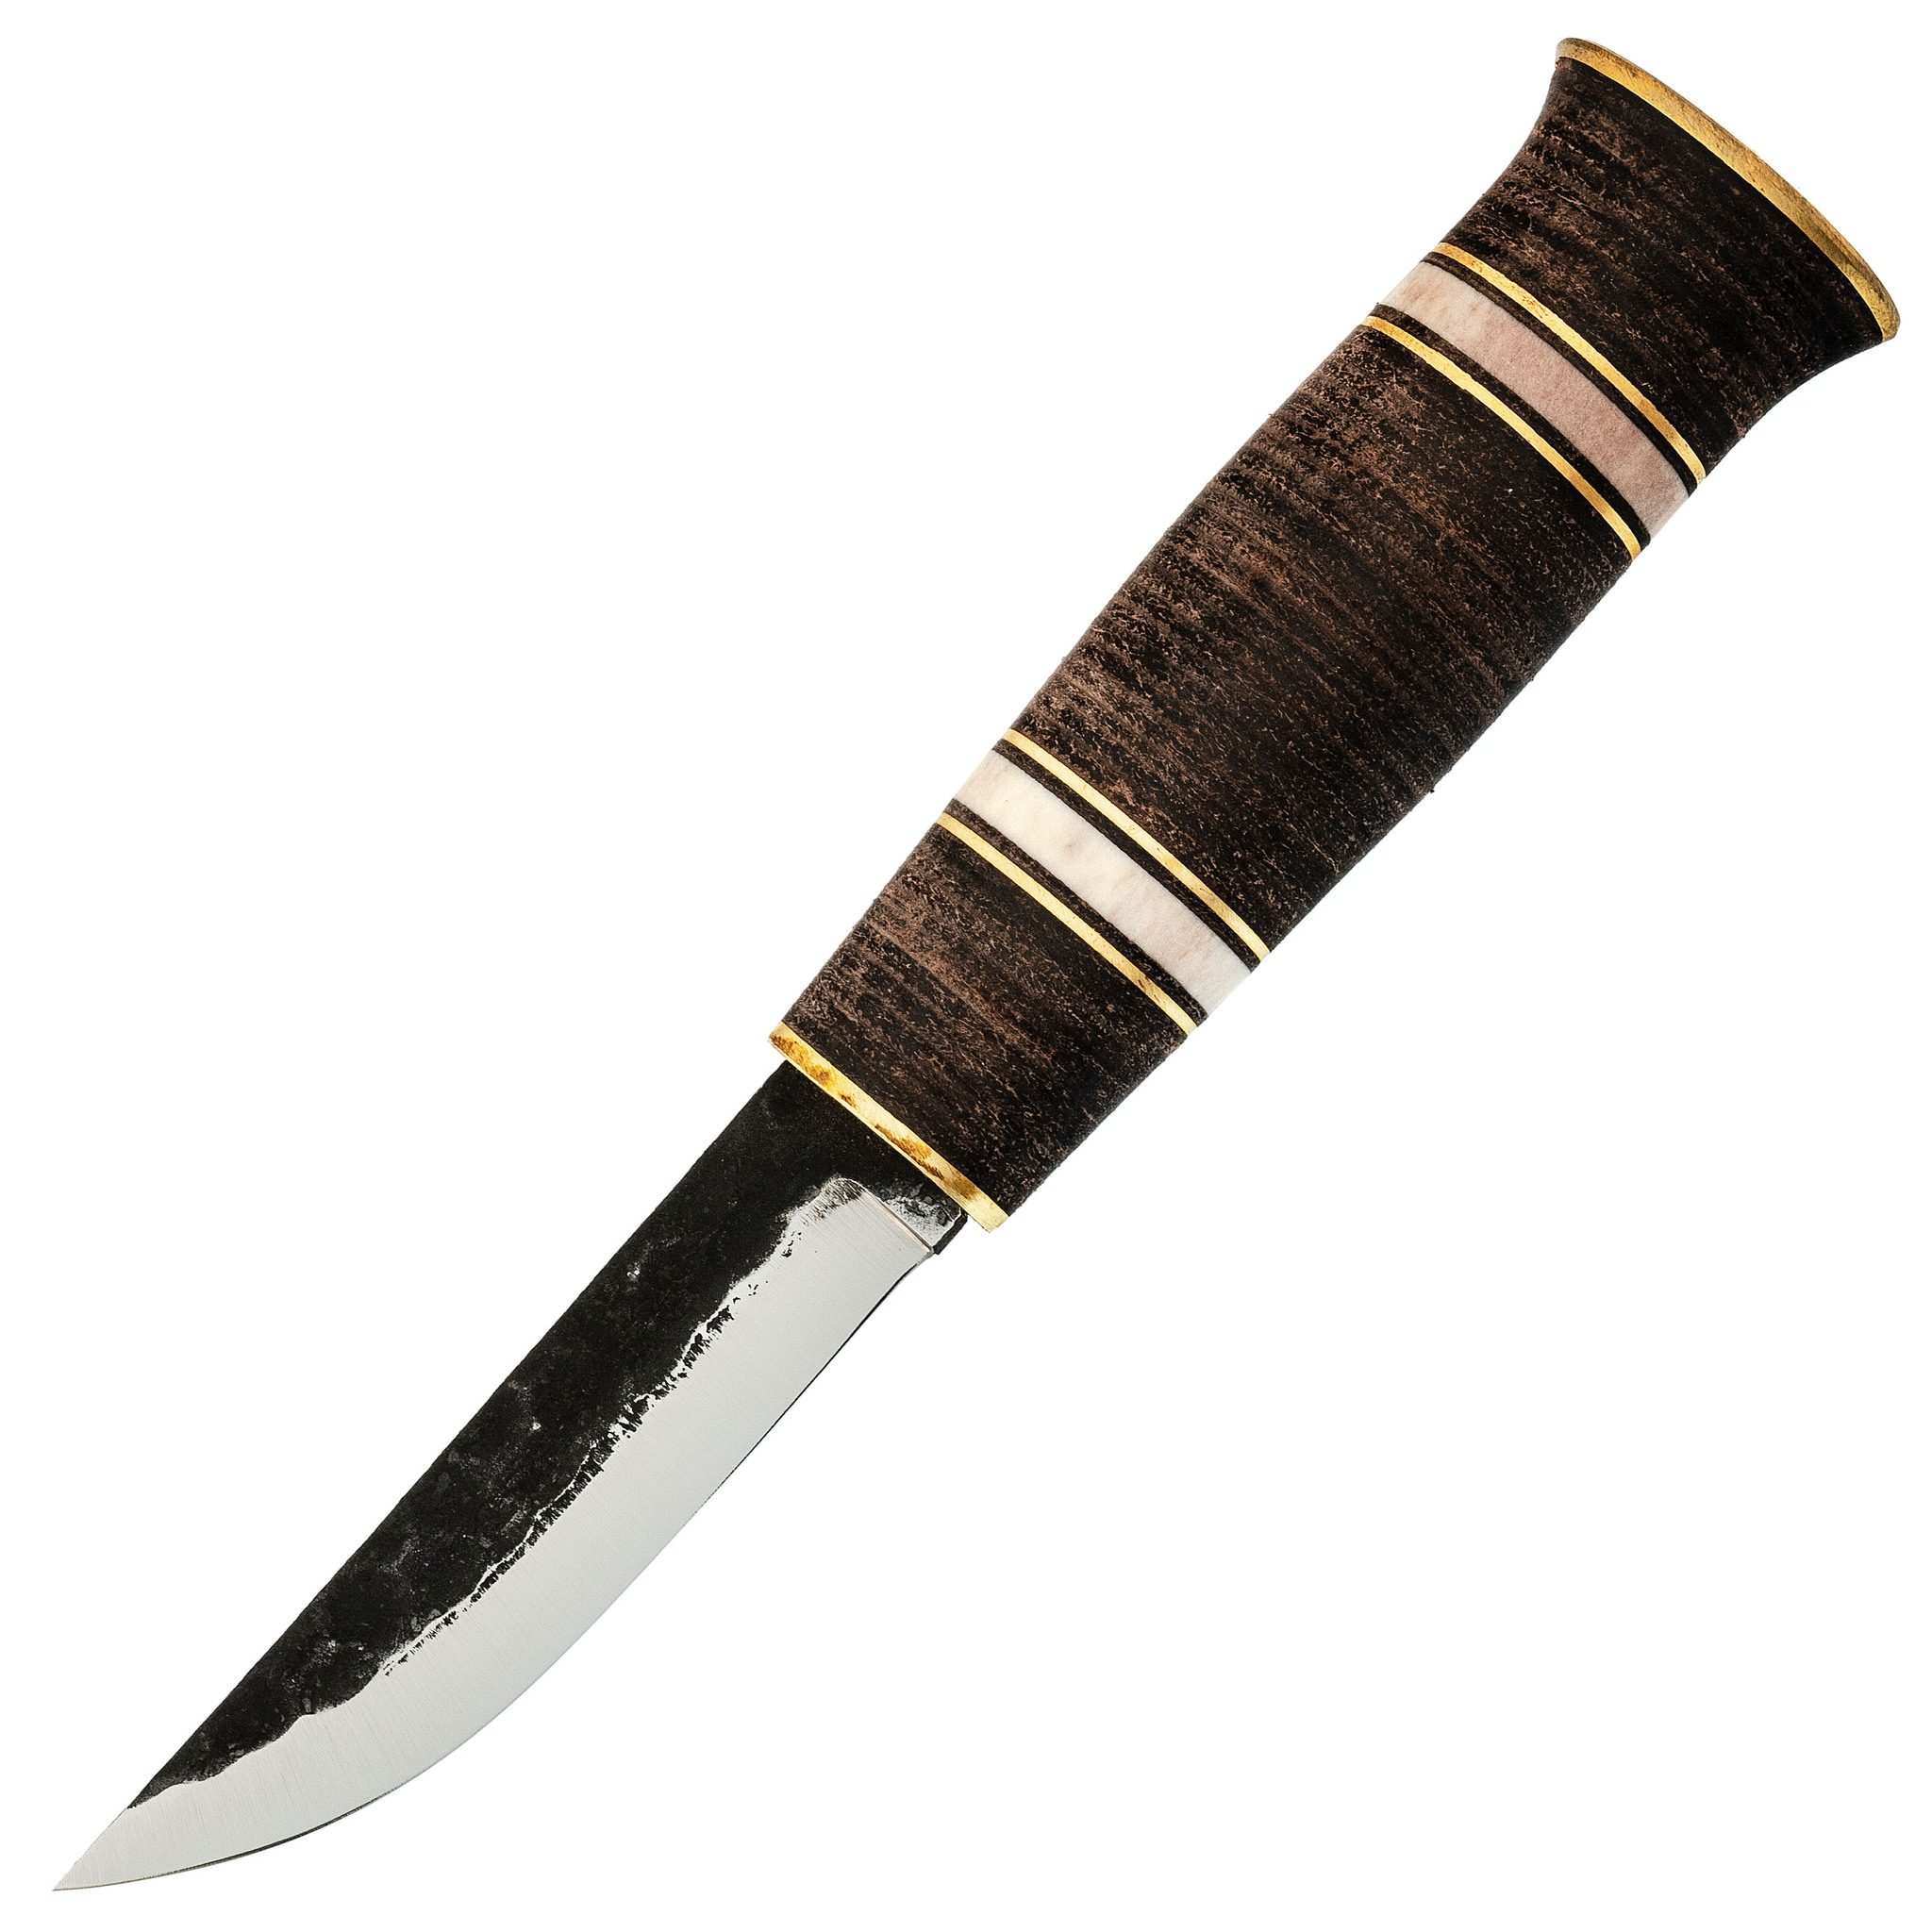 Нож Erpuu Puukko Leather 95, сталь 80CrV2, кожа/рог оленя